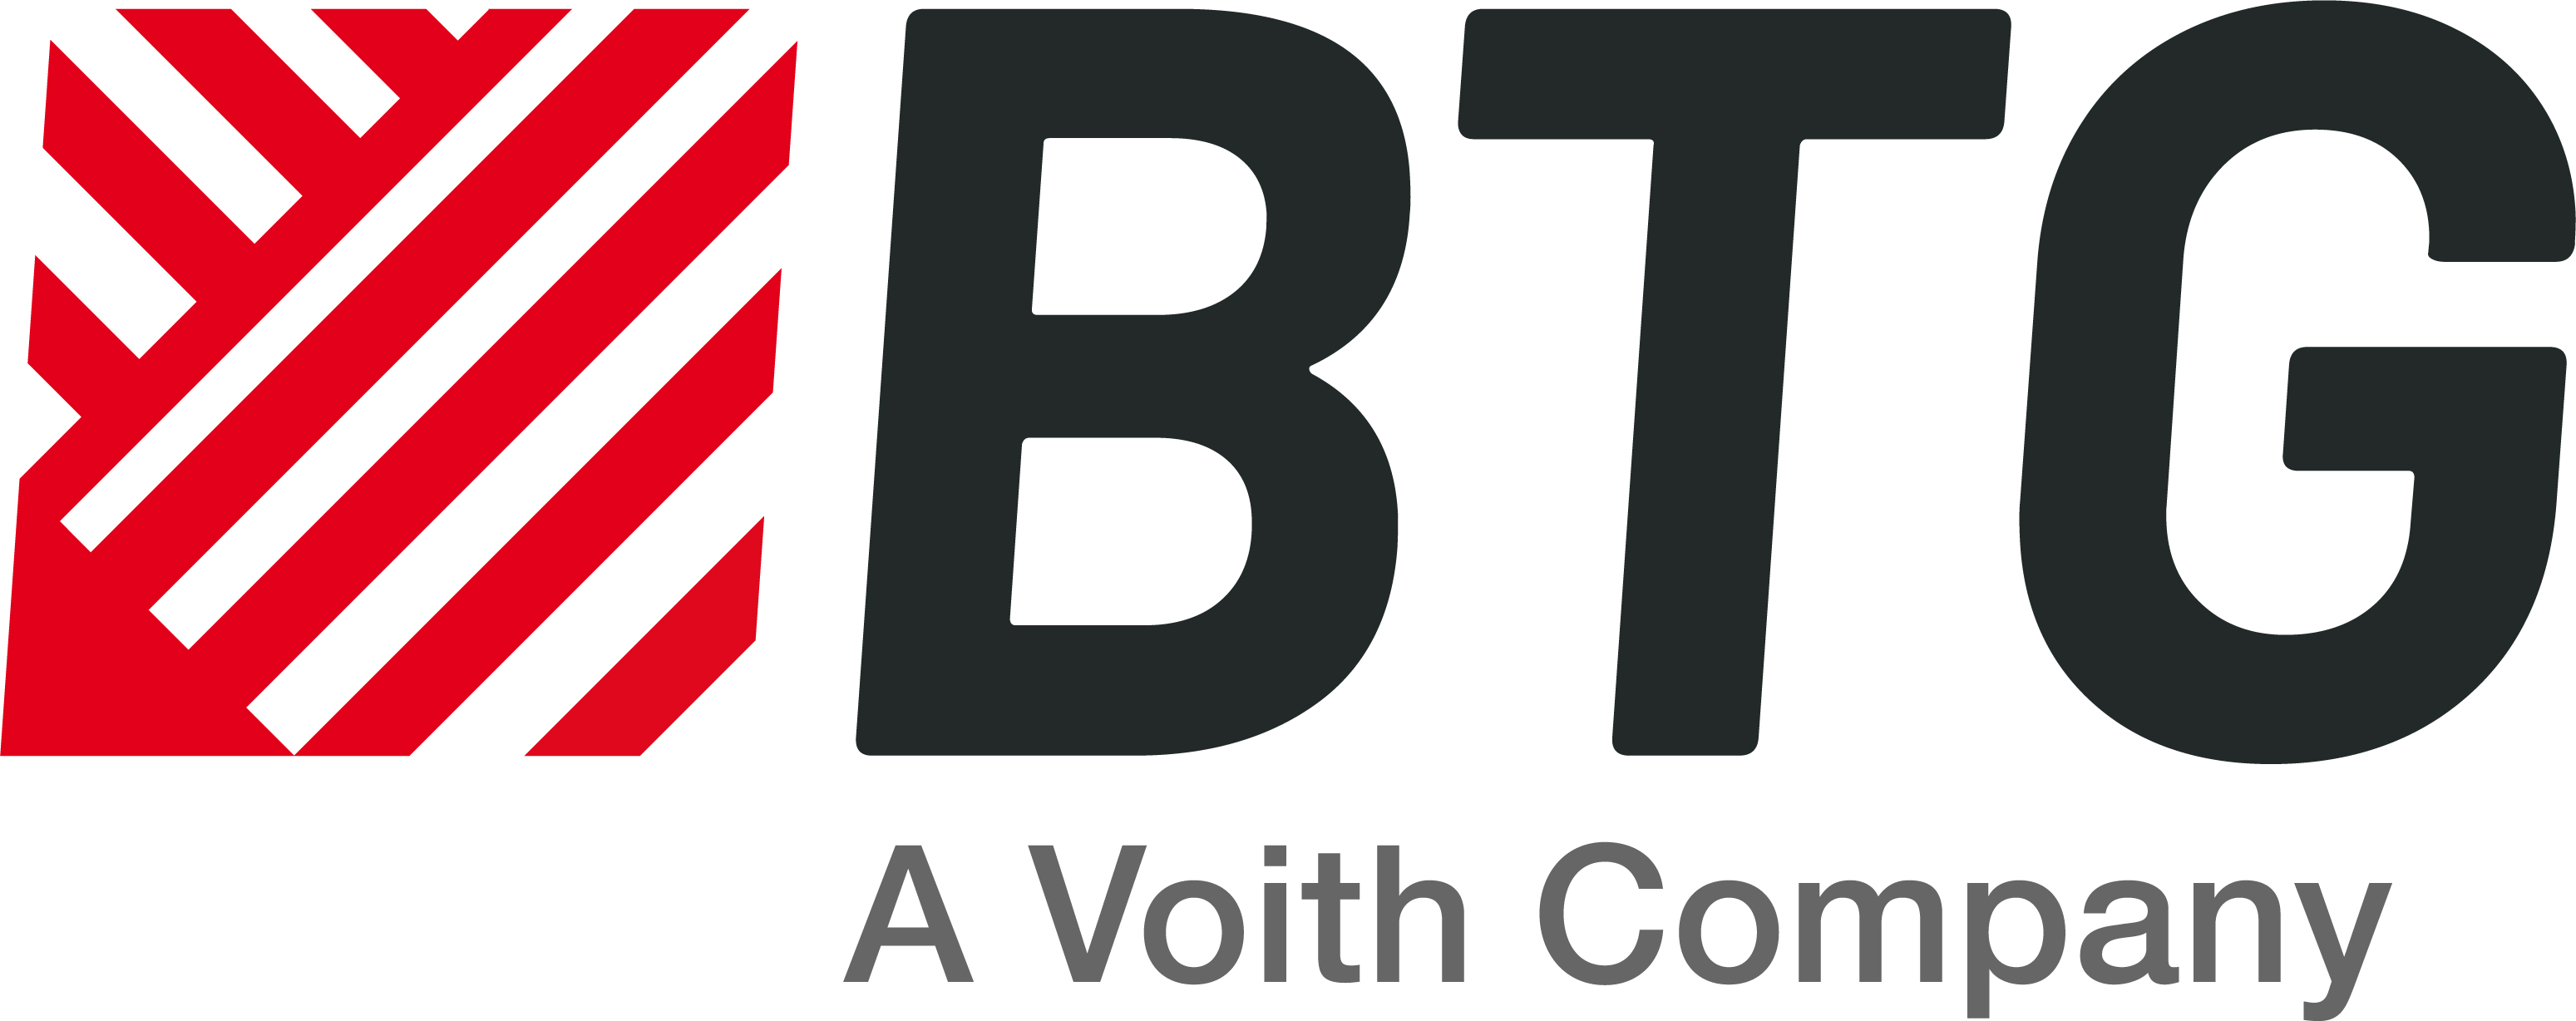 BTG_A-Voith Company_Logo_2019_colored_RGB.jpg